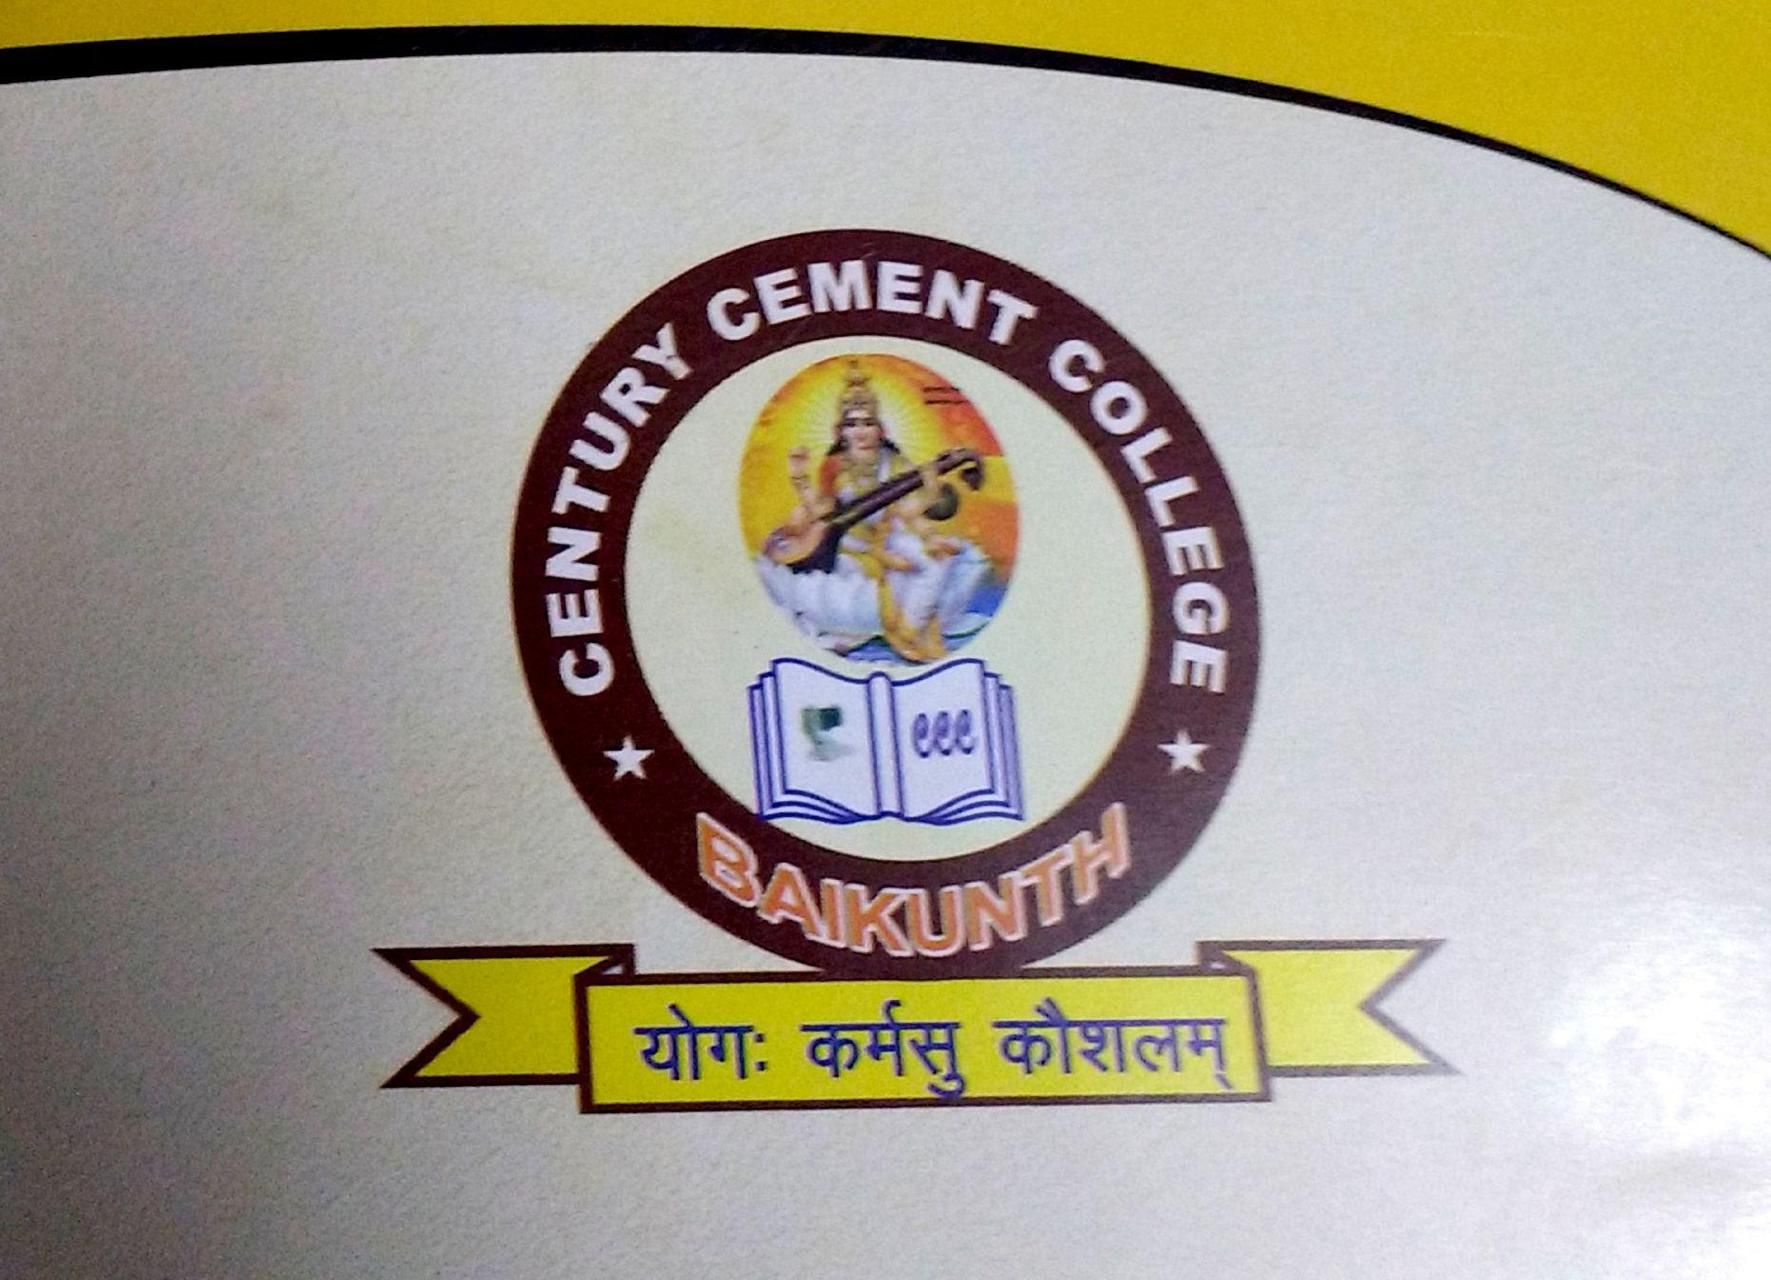 Century Cement College